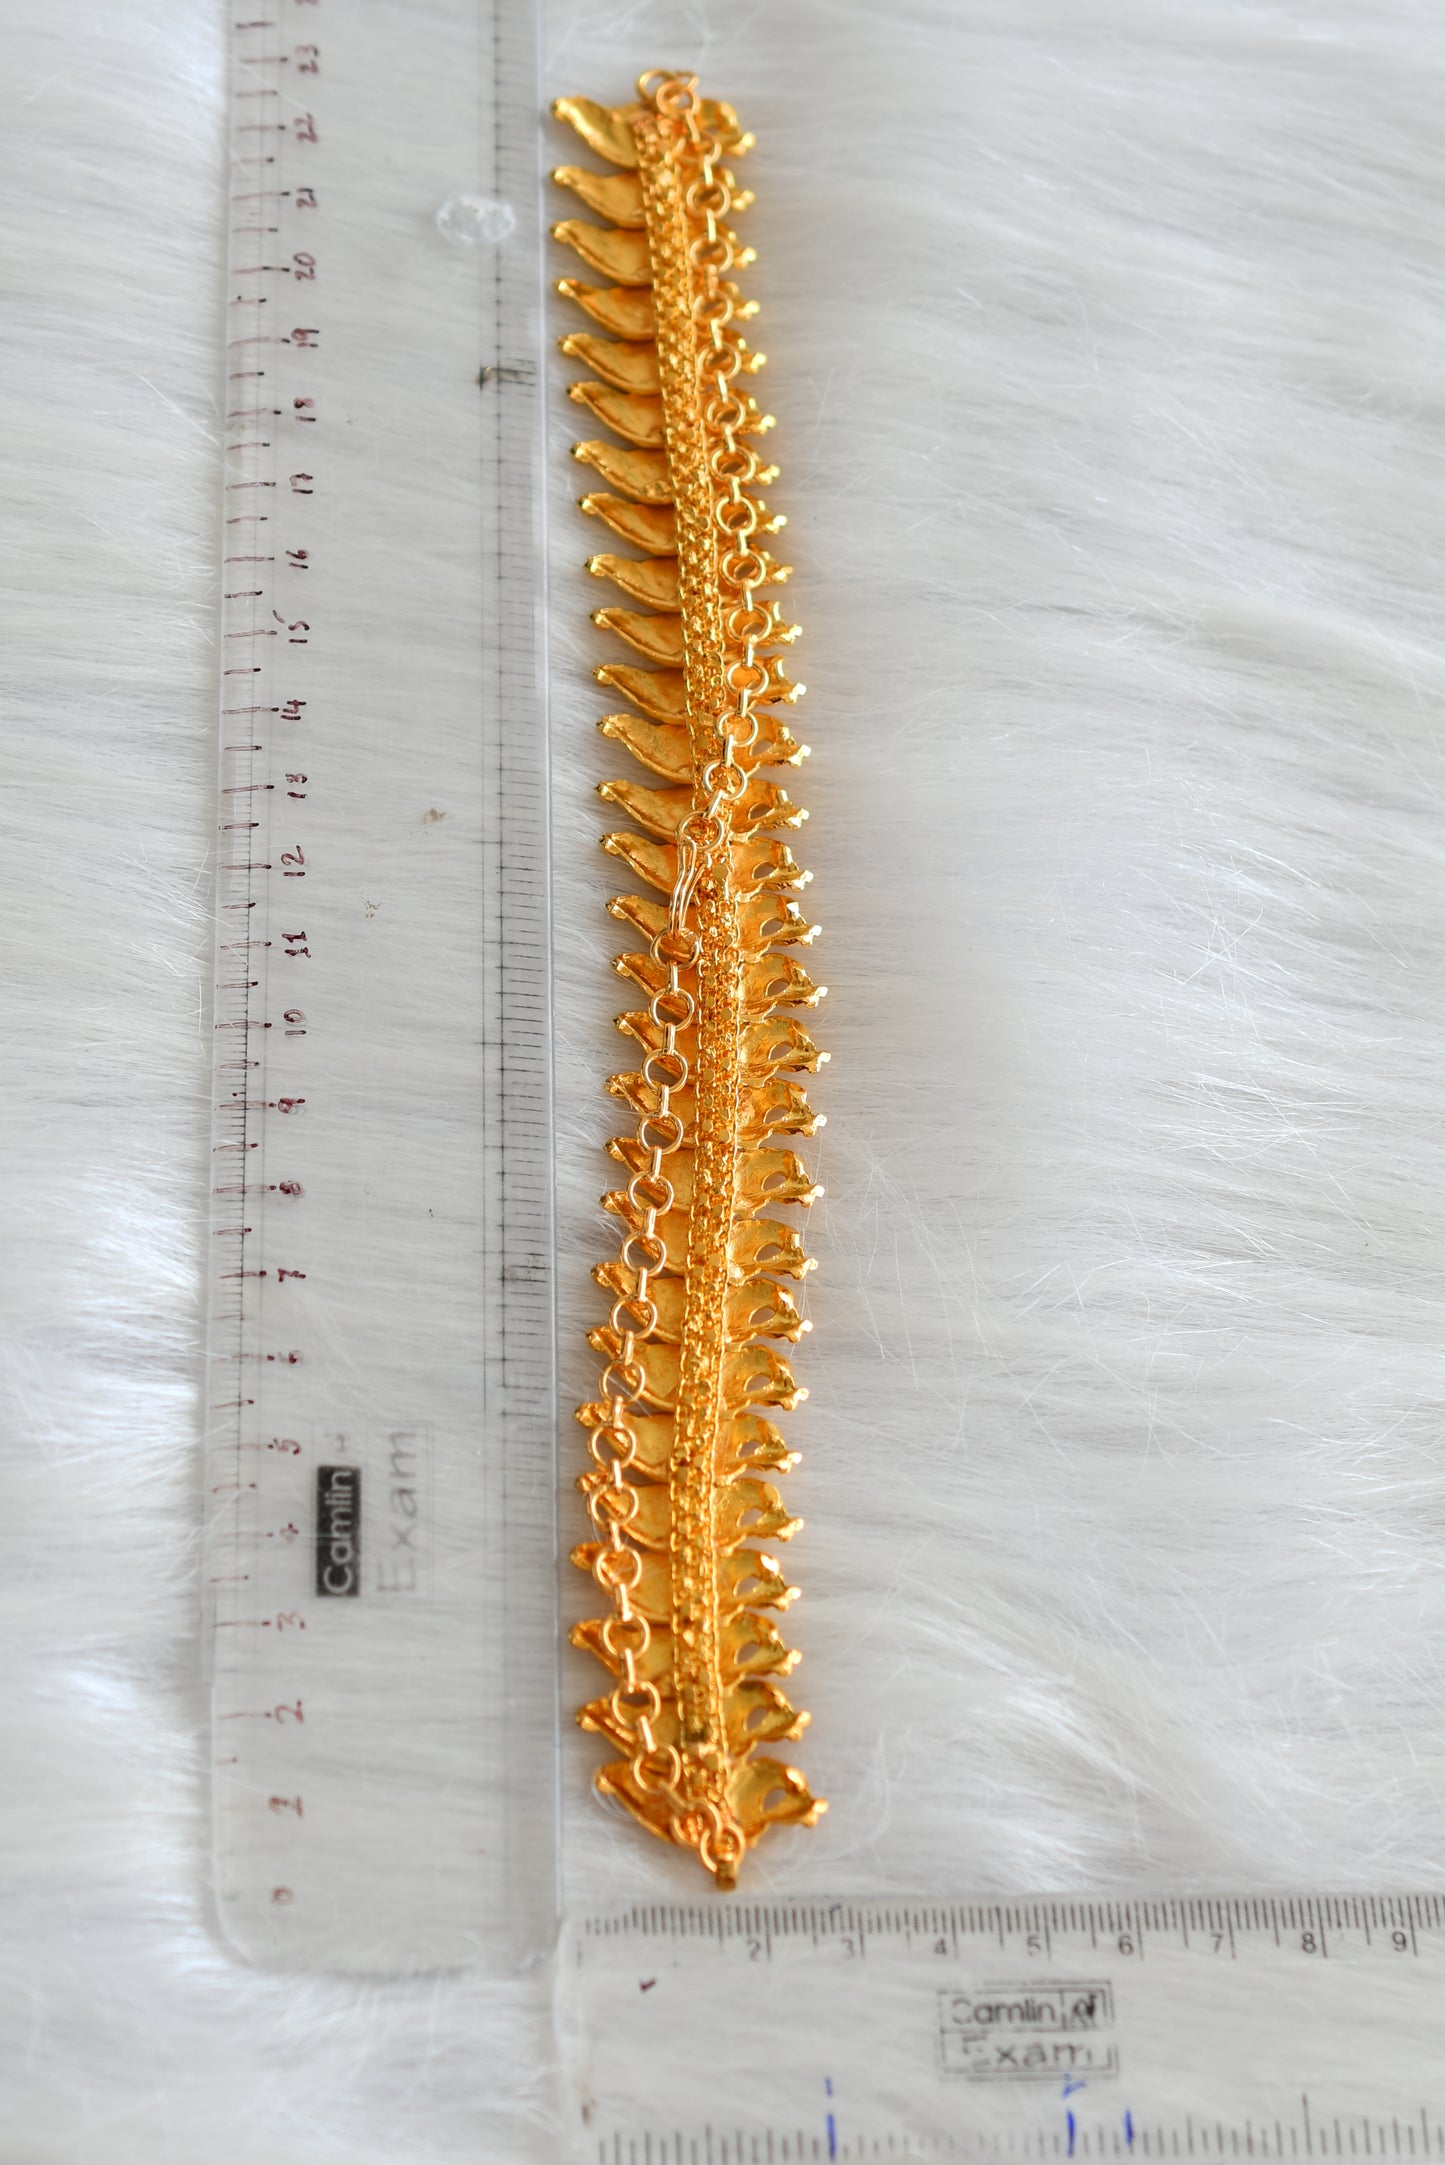 Gold tone stoneless peacock necklace dj-42984